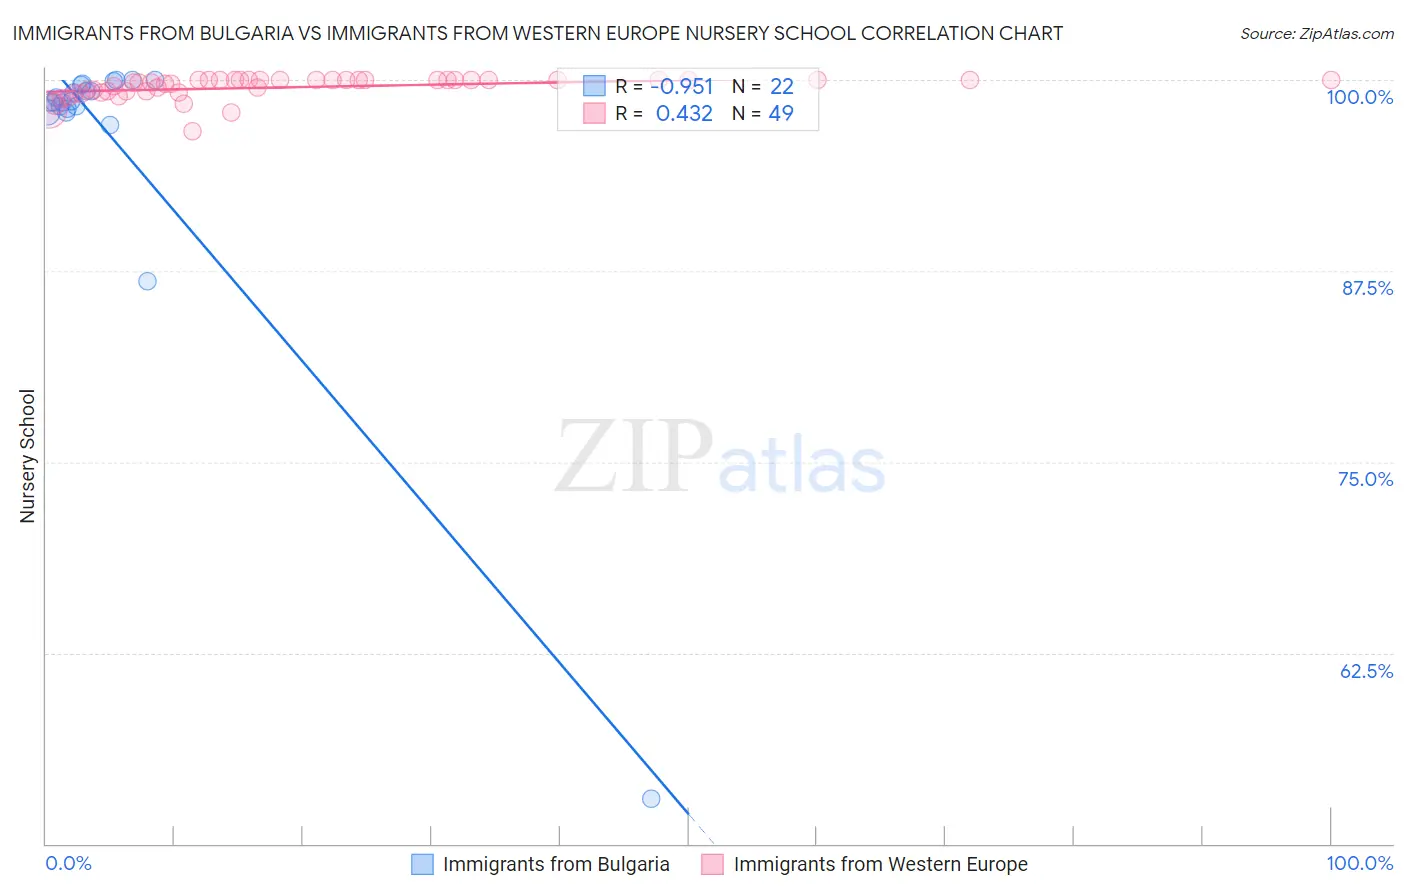 Immigrants from Bulgaria vs Immigrants from Western Europe Nursery School